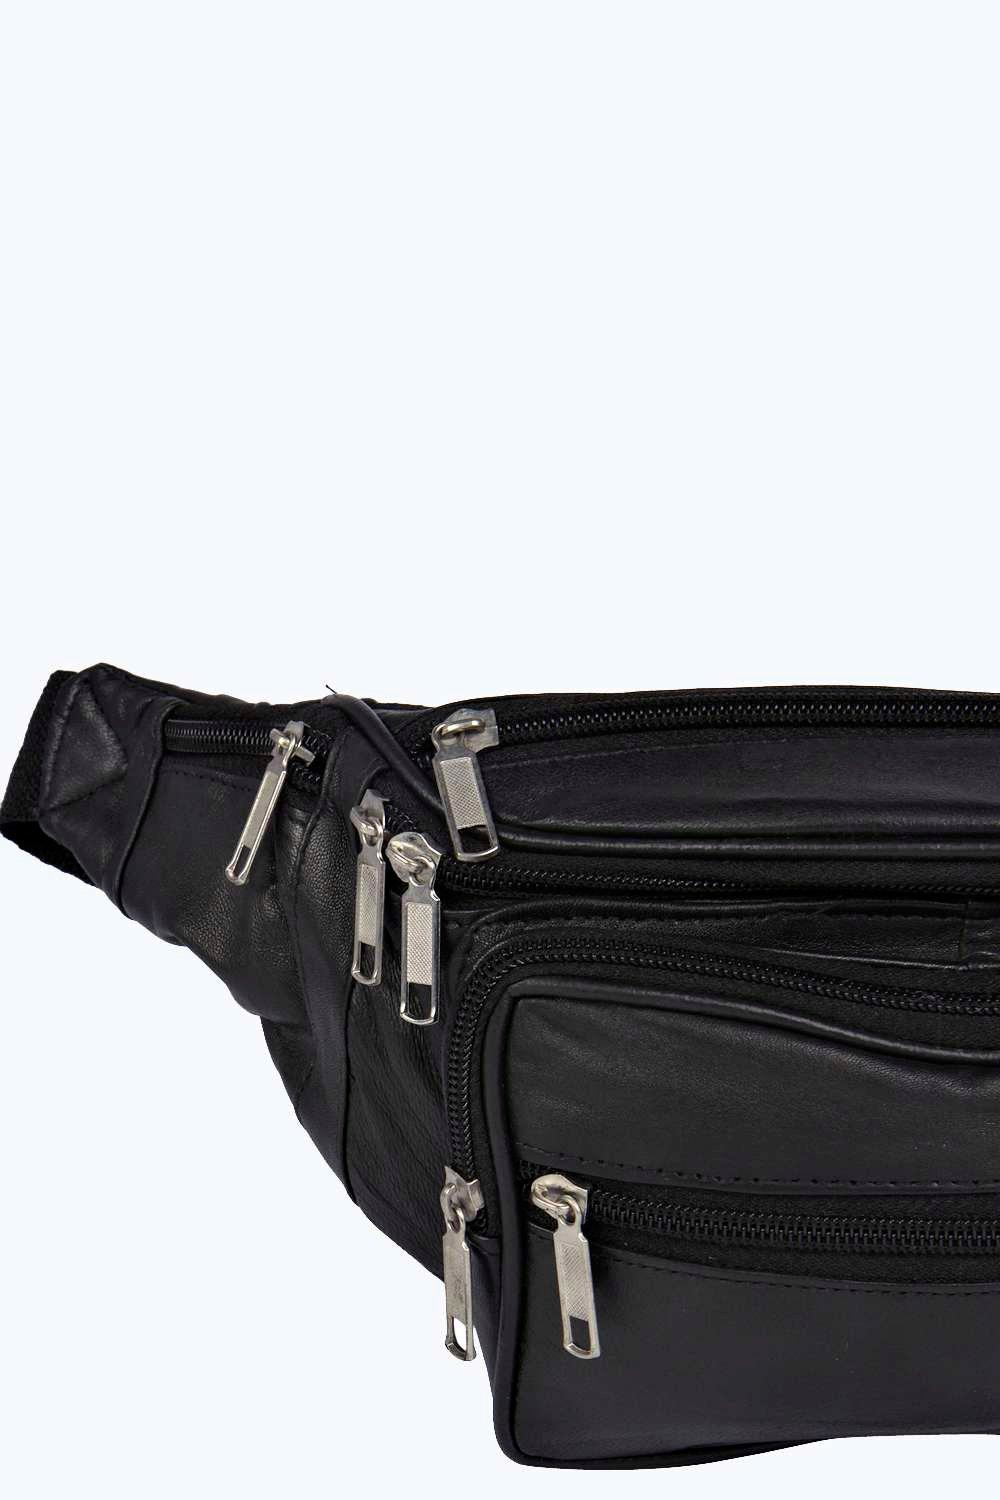 Lyst - Boohoo Leather Front Pocket Bum Bag in Black for Men